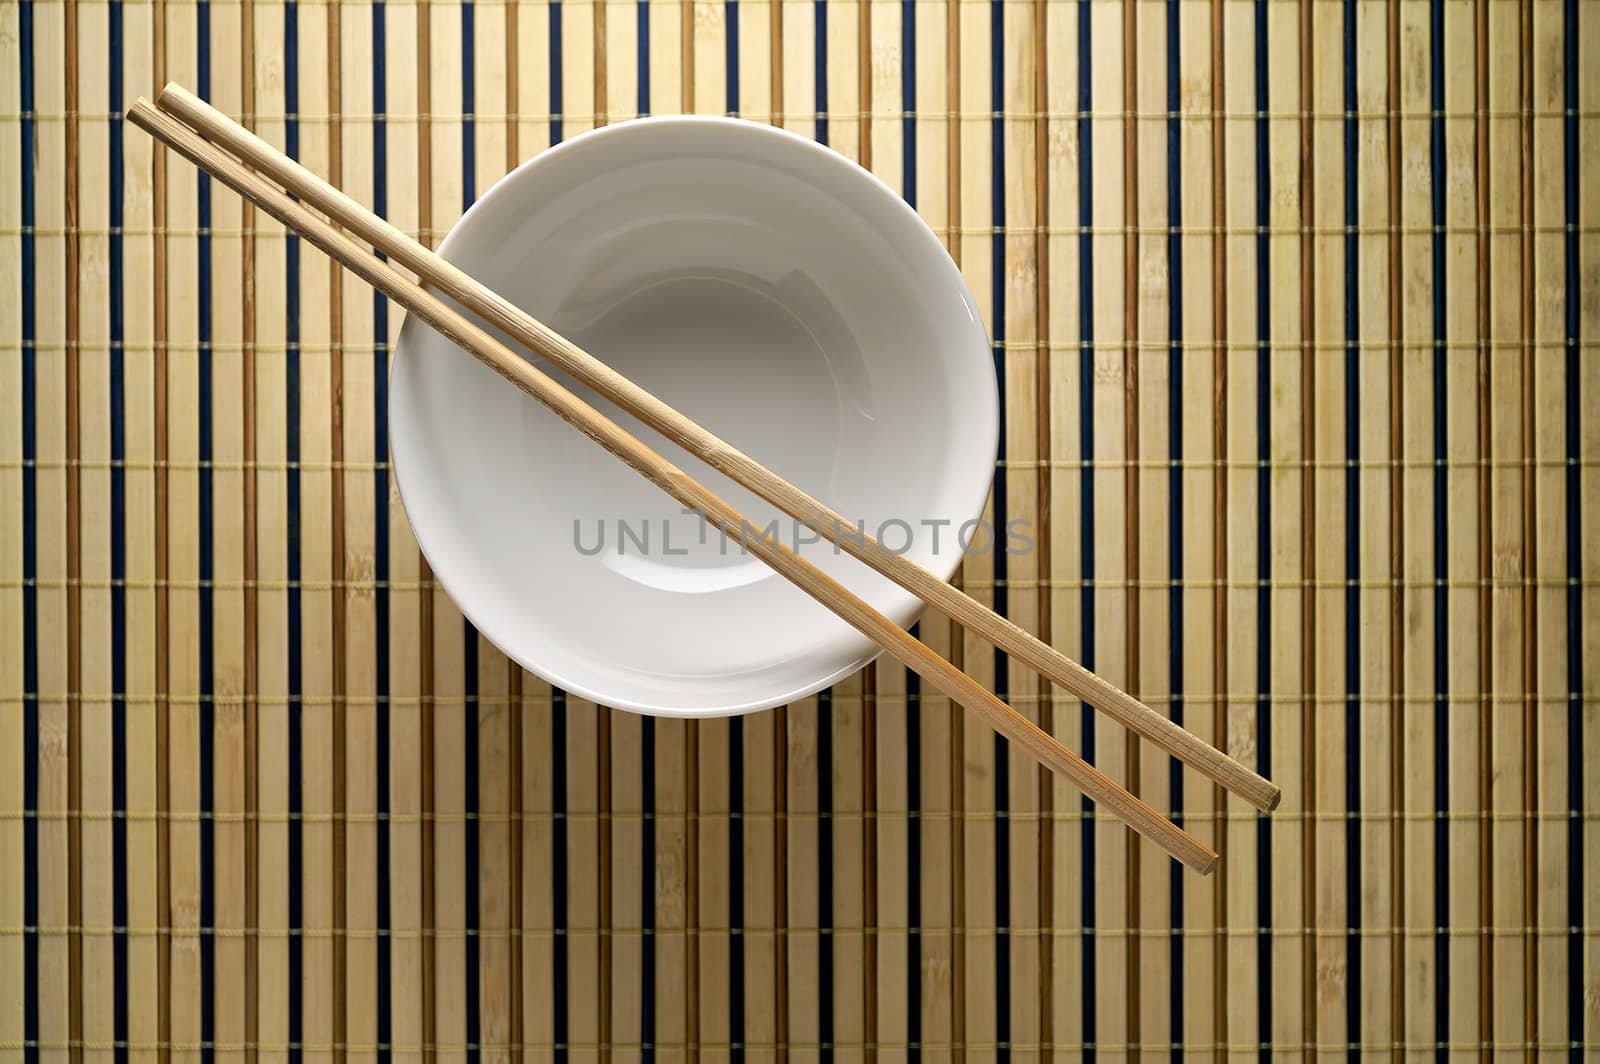 Bowl and chopsticks on bamboo mat